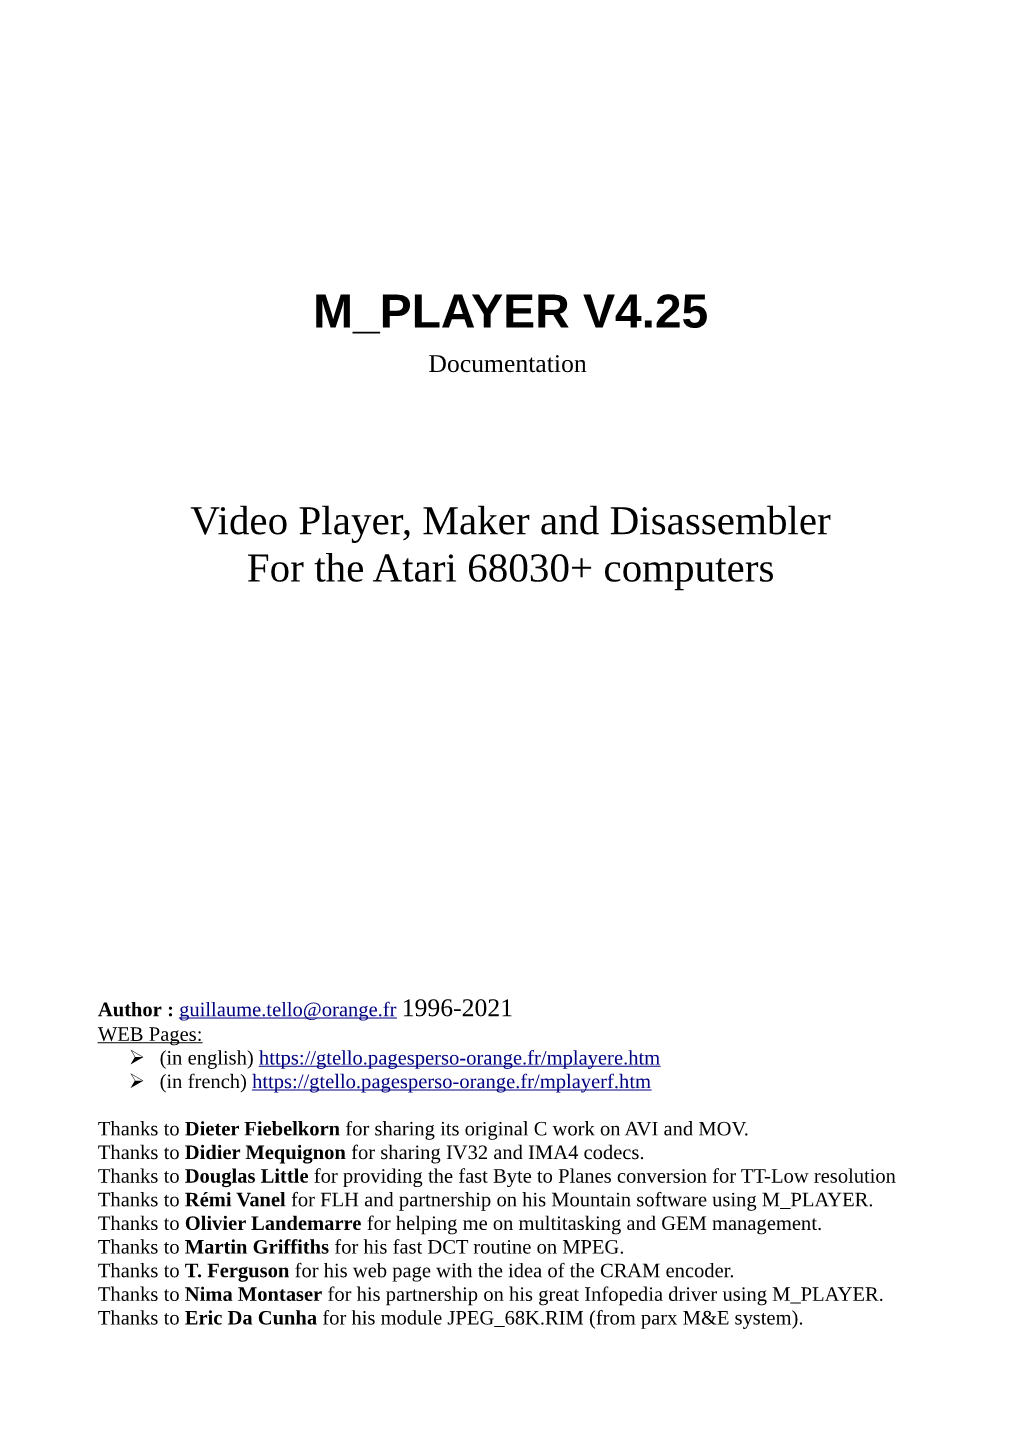 M Player V4.09